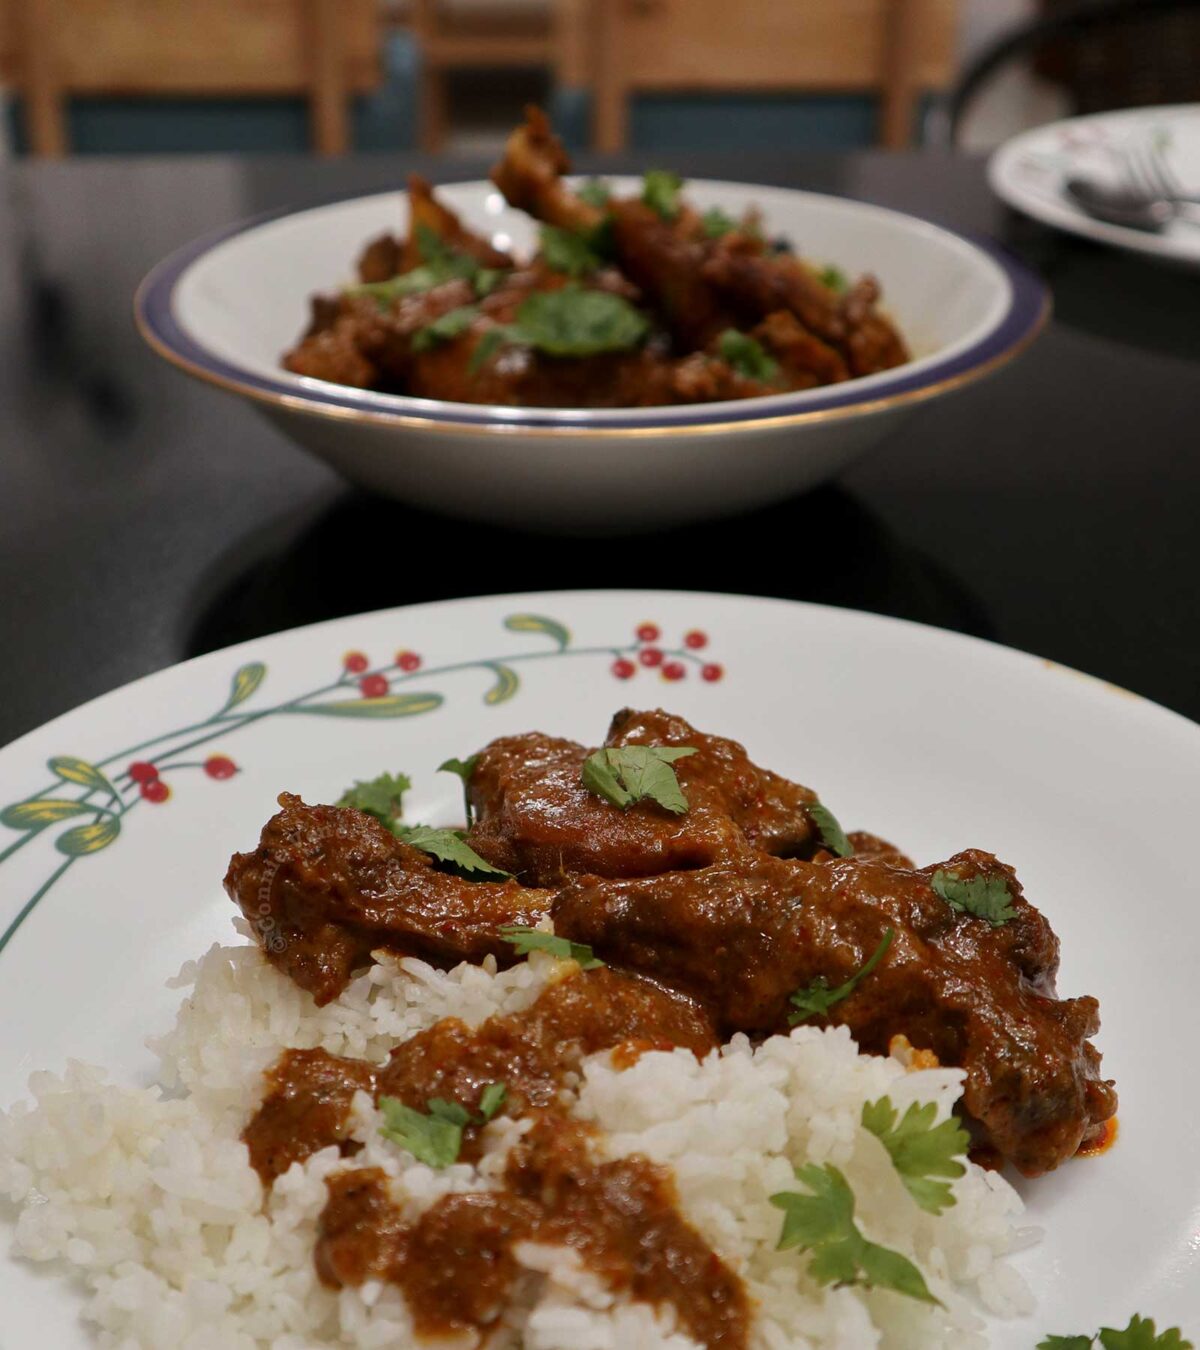 Phanaeng duck curry over rice